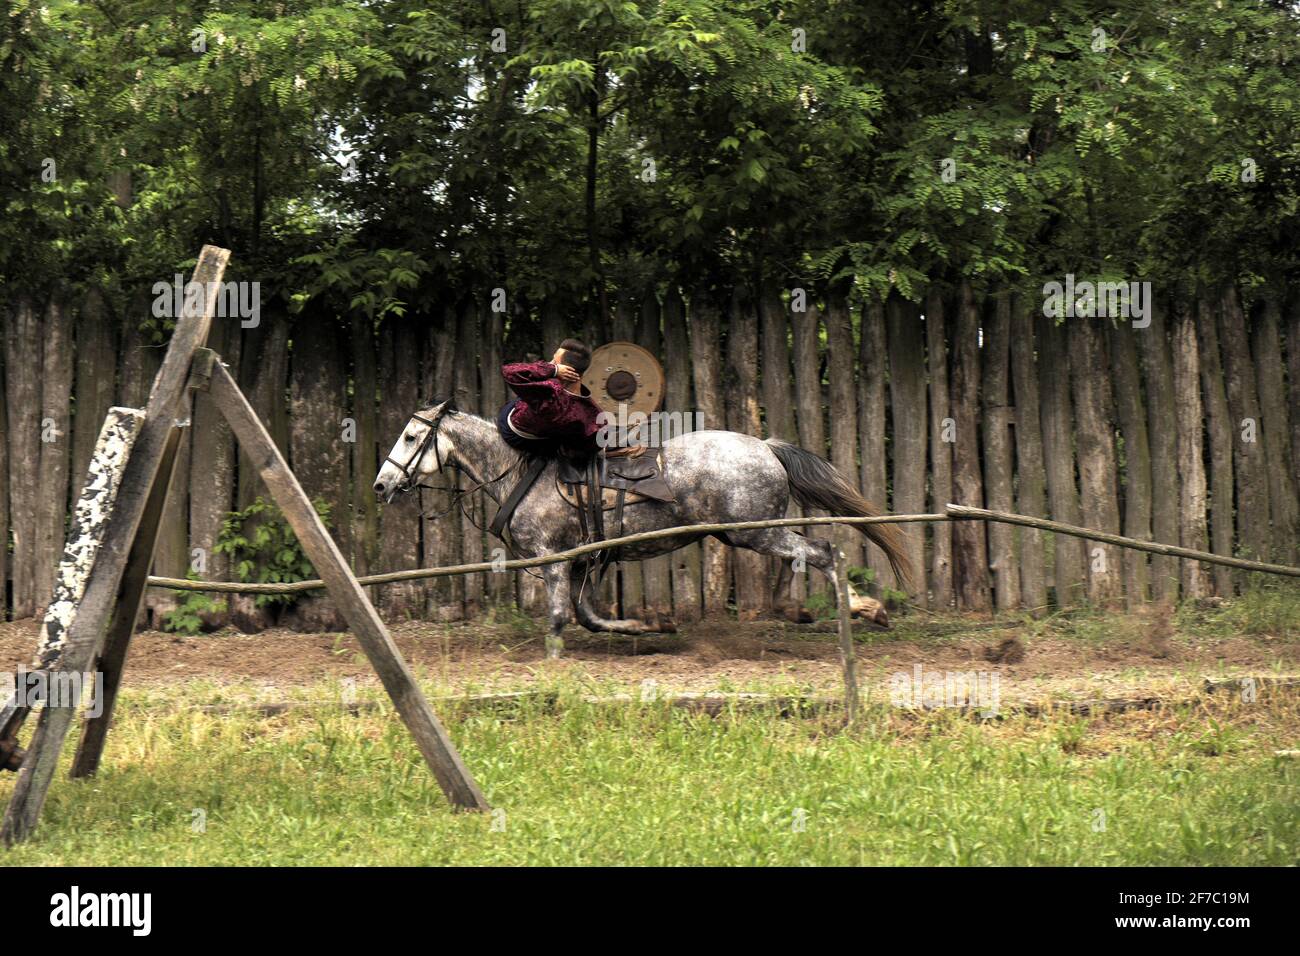 Display of Cossack horsemanship, Khortitsa Island, River Dnieper, Zaporozhye, Ukraine. Stock Photo